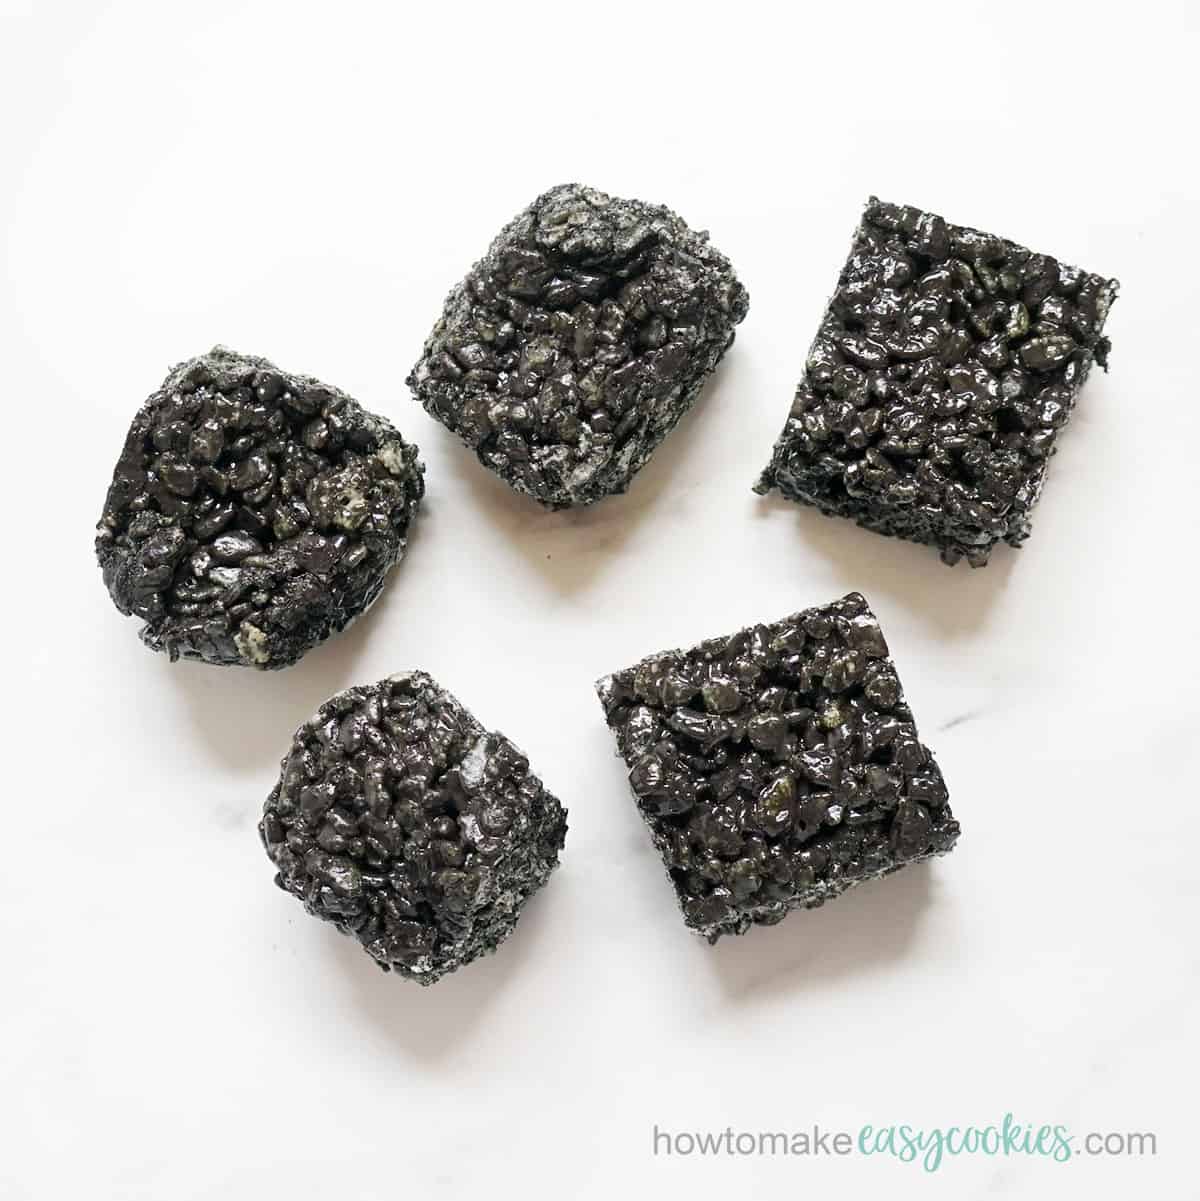 shaping black rice krispie treats into coal